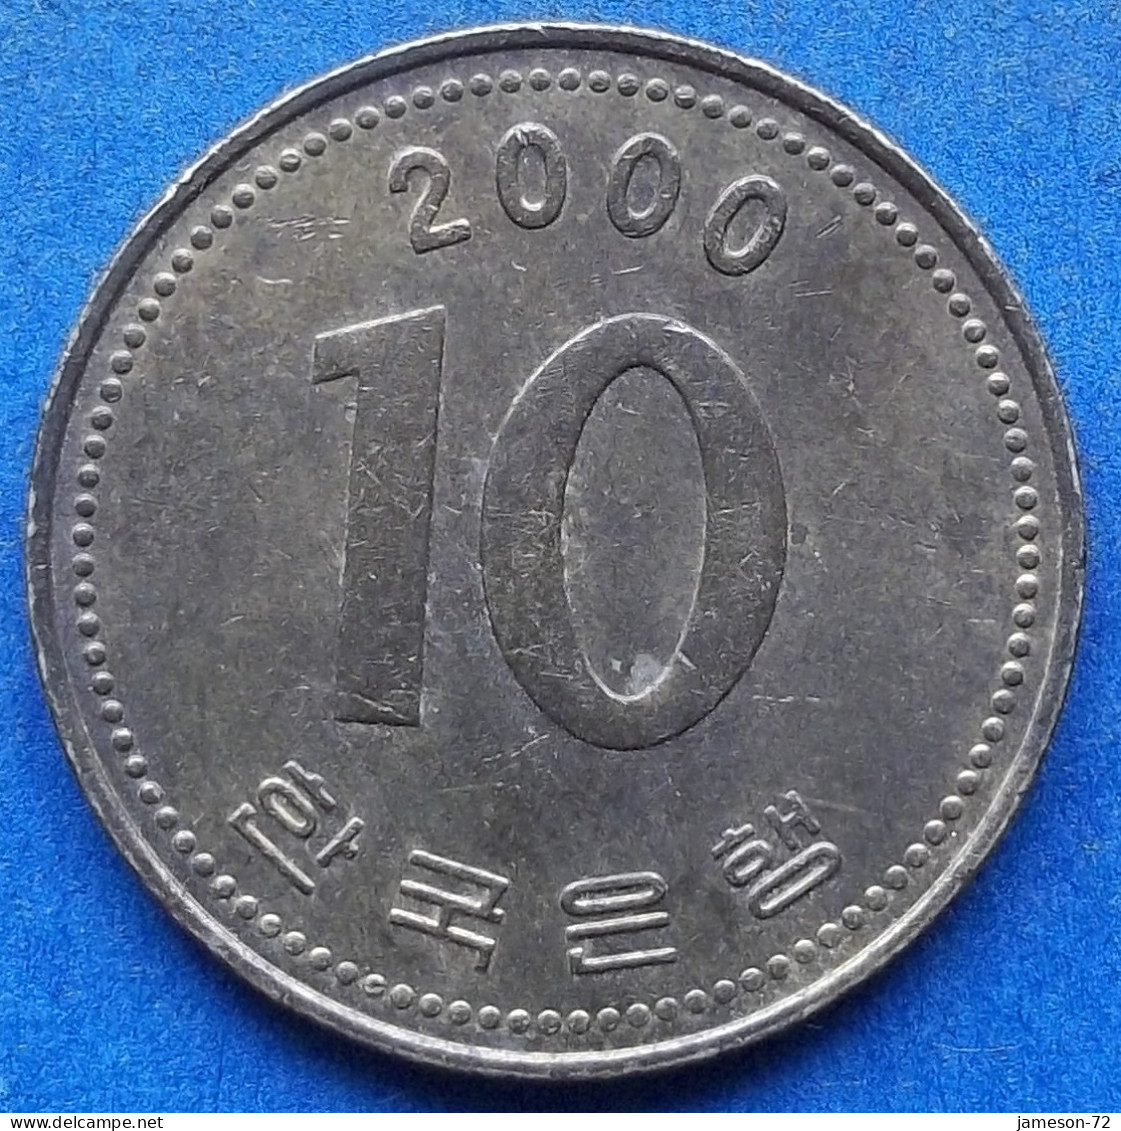 SOUTH KOREA - 10 Won 2000 "Pagoda At Pul Puk Temple" KM# 33.2 Monetary Reform (1966) - Edelweiss Coins - Korea (Zuid)